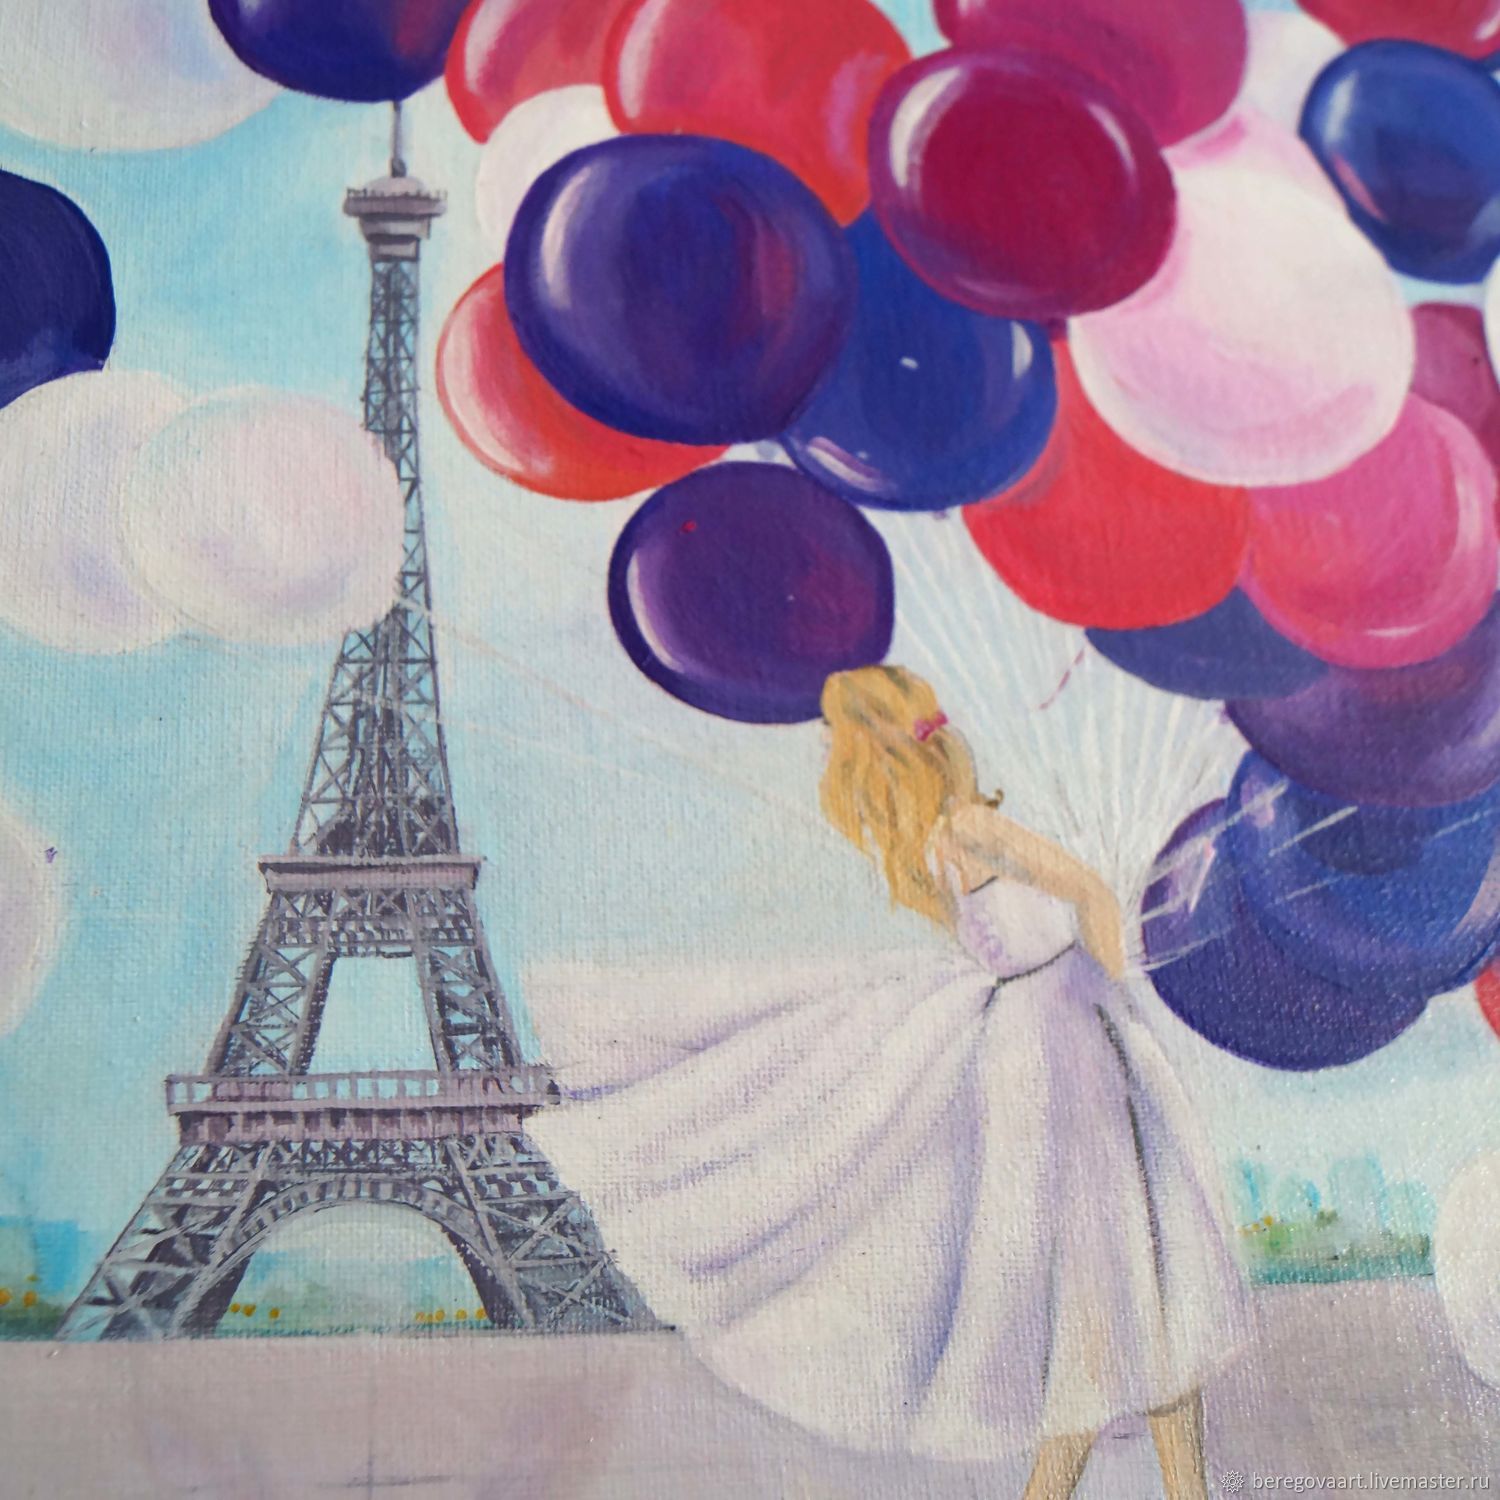 Balloon painting princess diaries